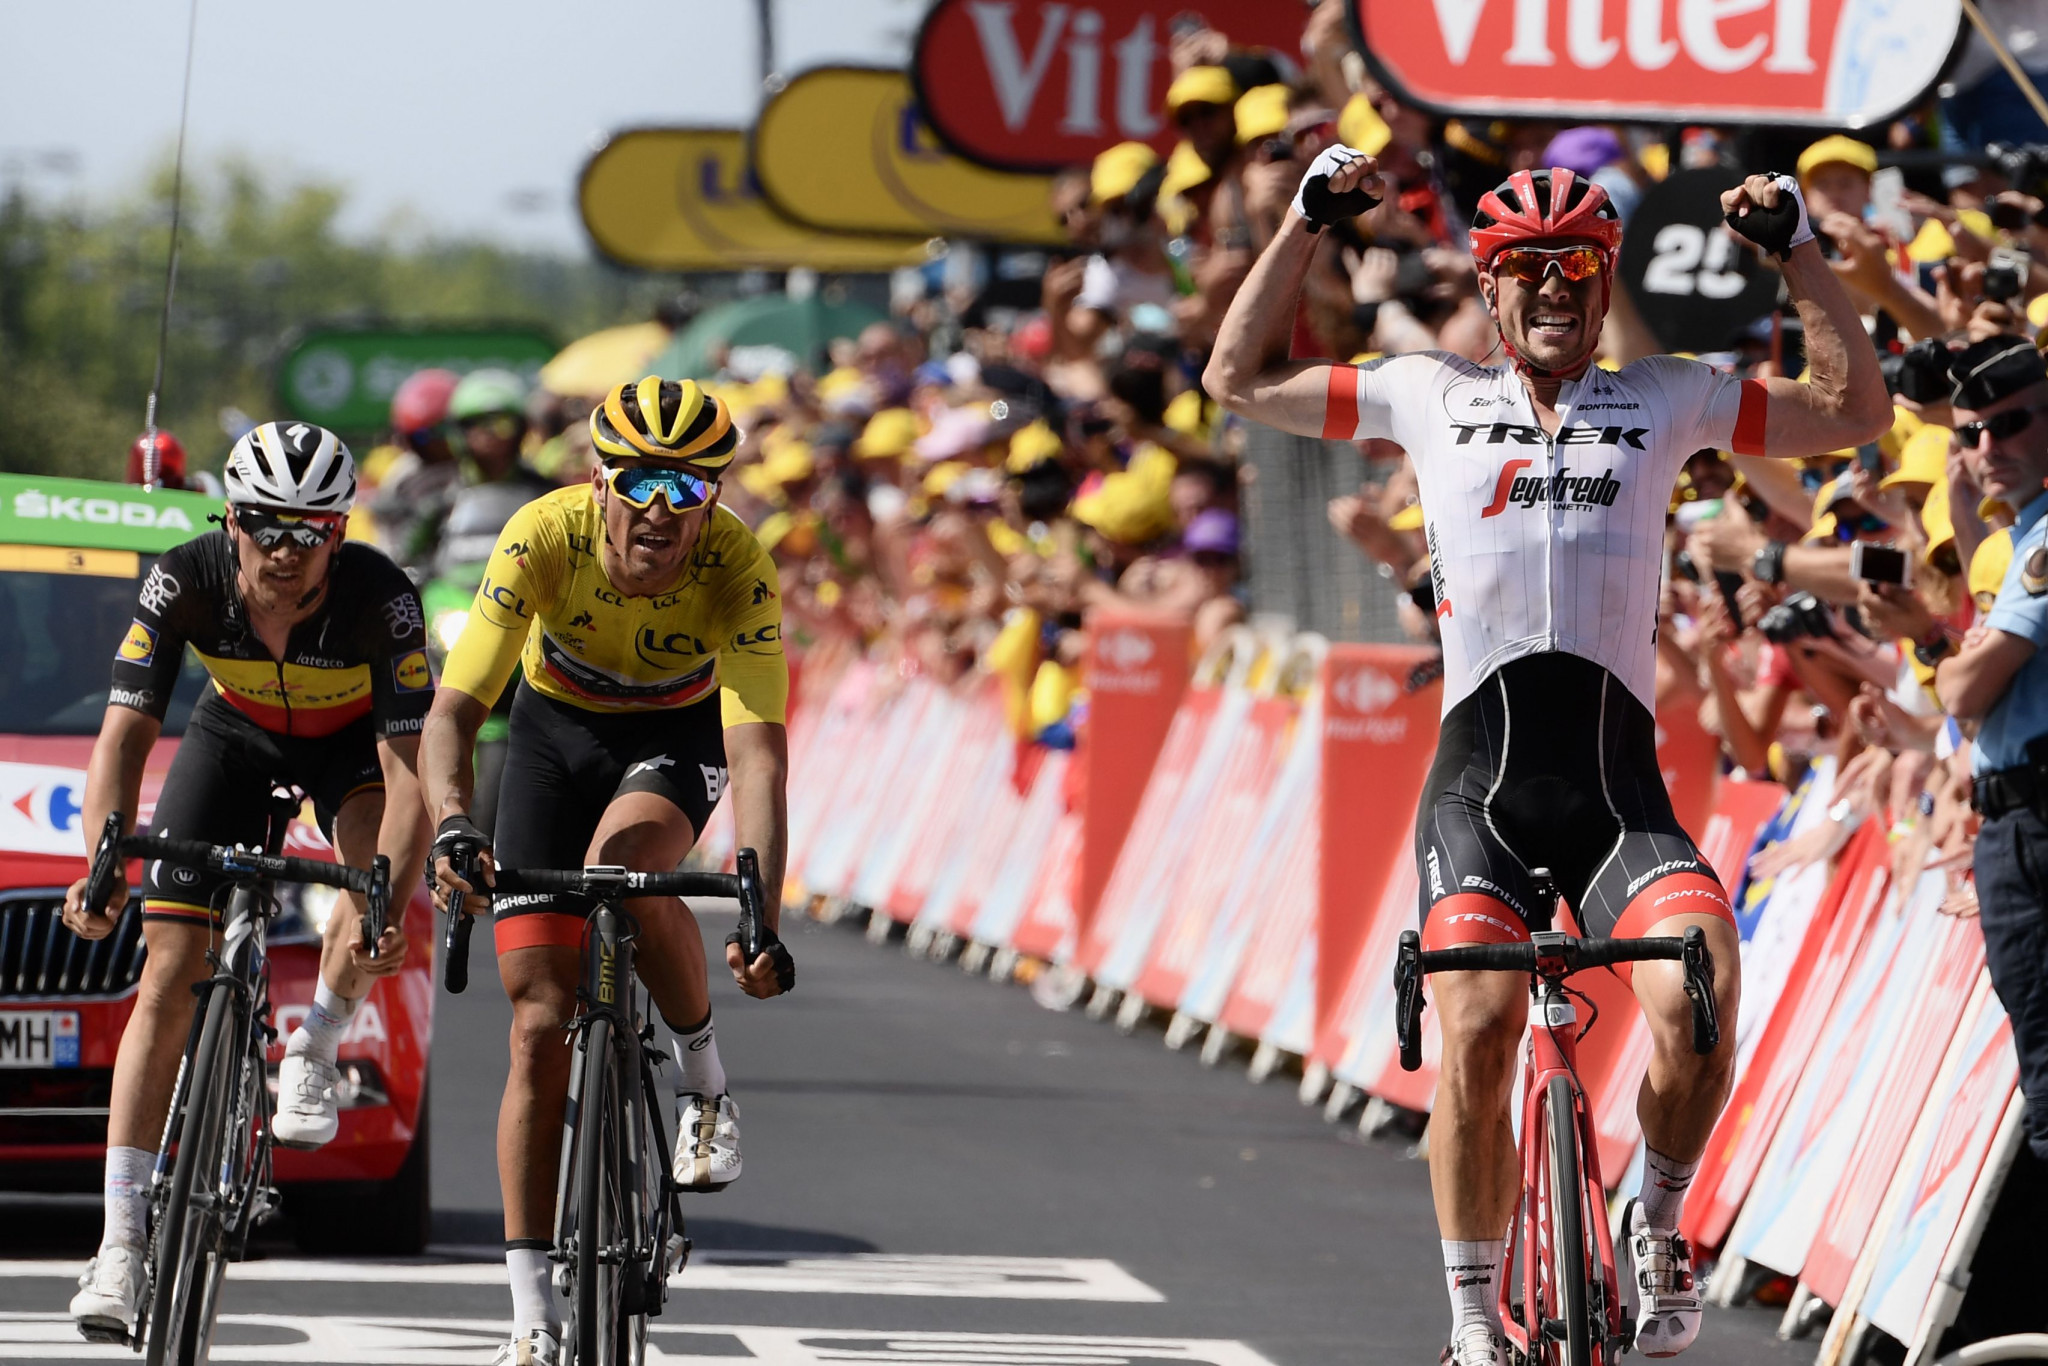 Degenkolb earns emotional win as cobbled stage tests Tour de France hopefuls